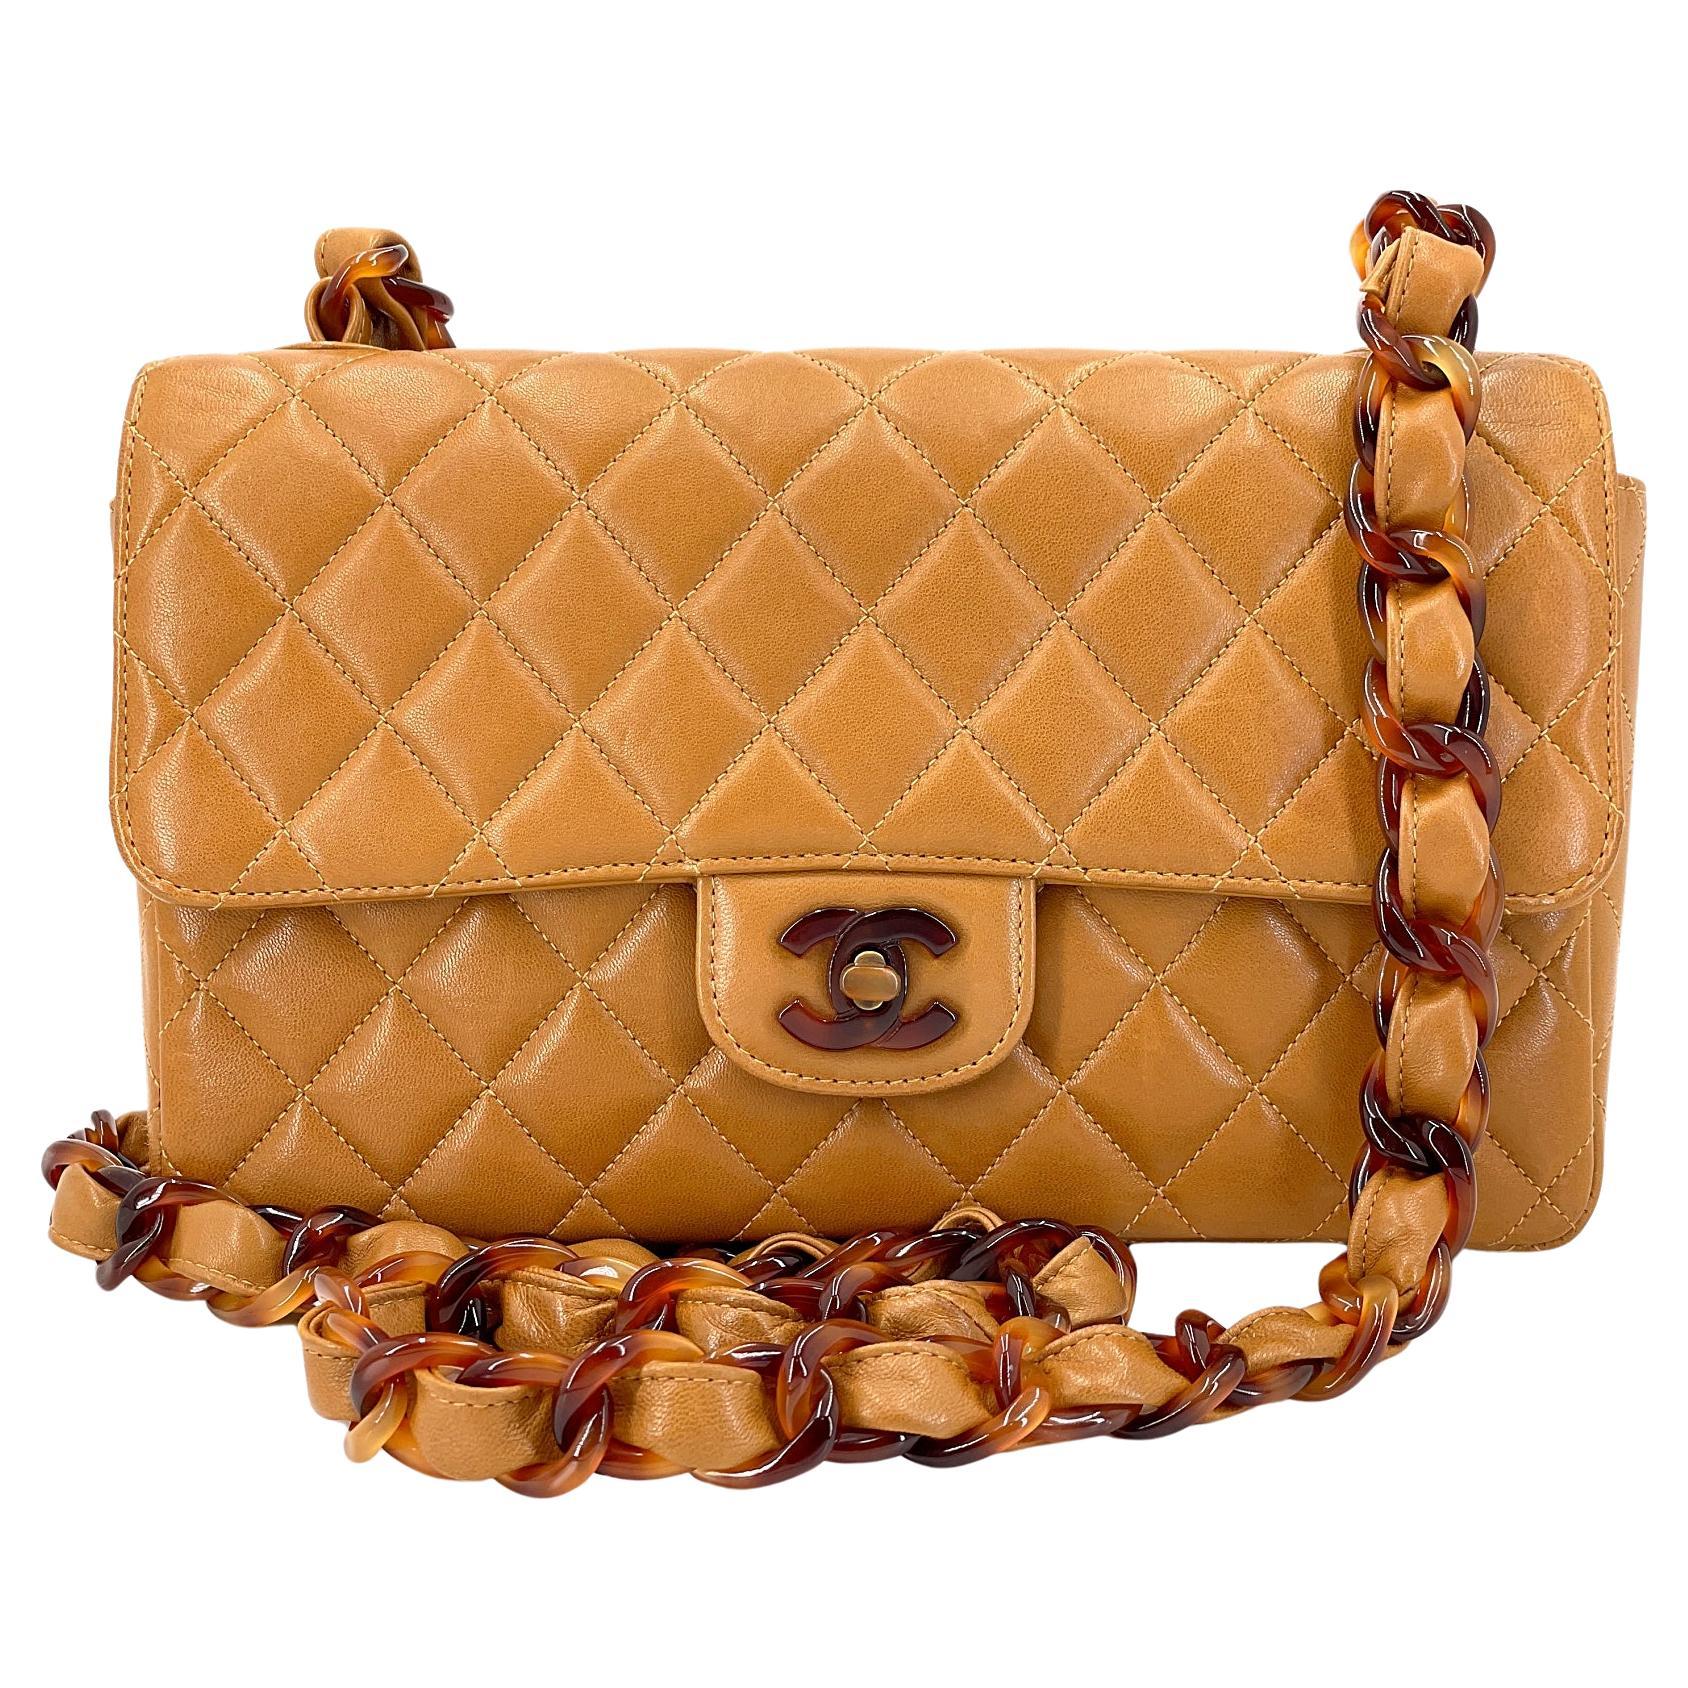 Chanel 1996 Vintage Caramel Beige Tortoise Classic Flap Bag Lambskin 68030 For Sale